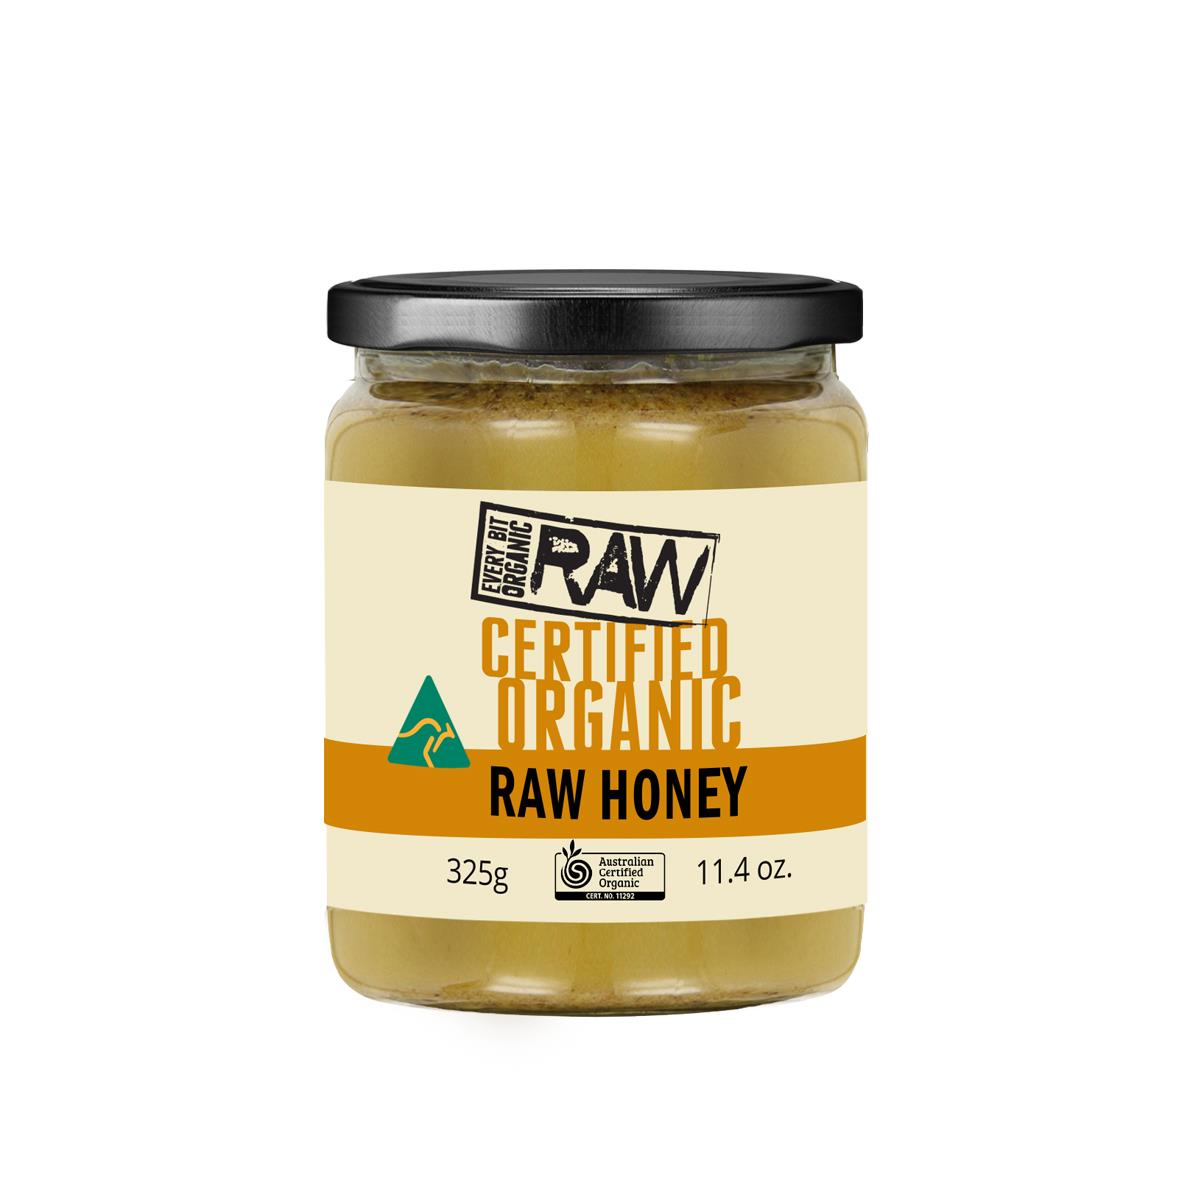 Every Bit Organic Raw Honey 325g-The Living Co.